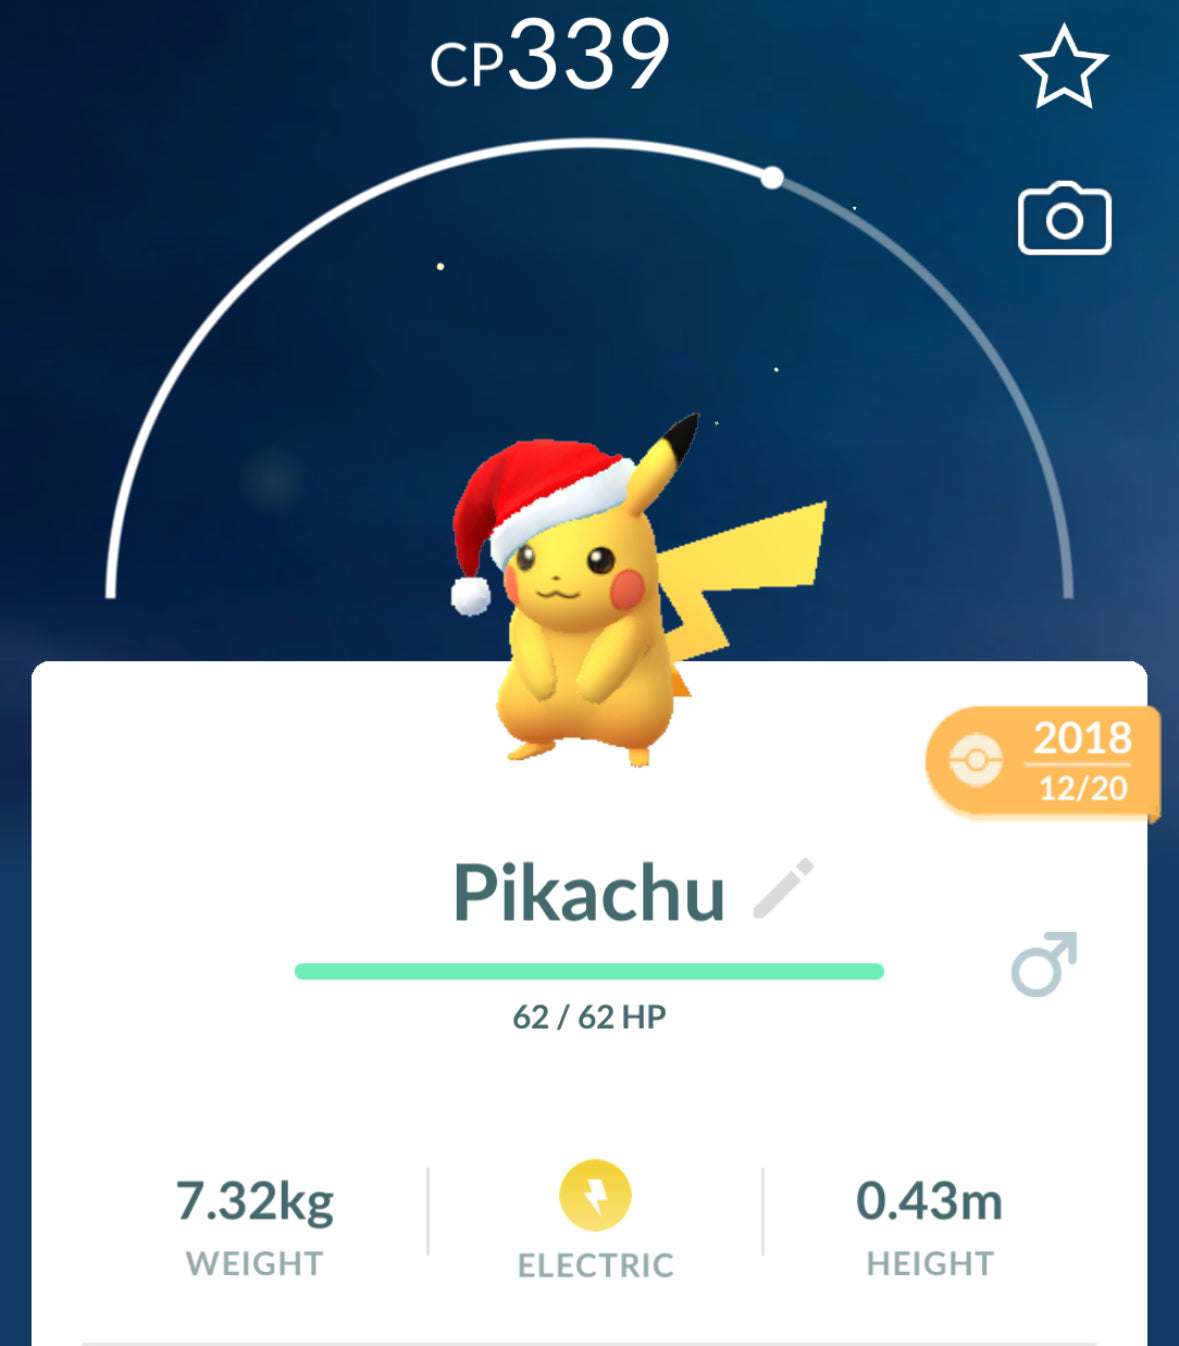 2018 Santa Hat Pikachu (buy 2 get 1 free)